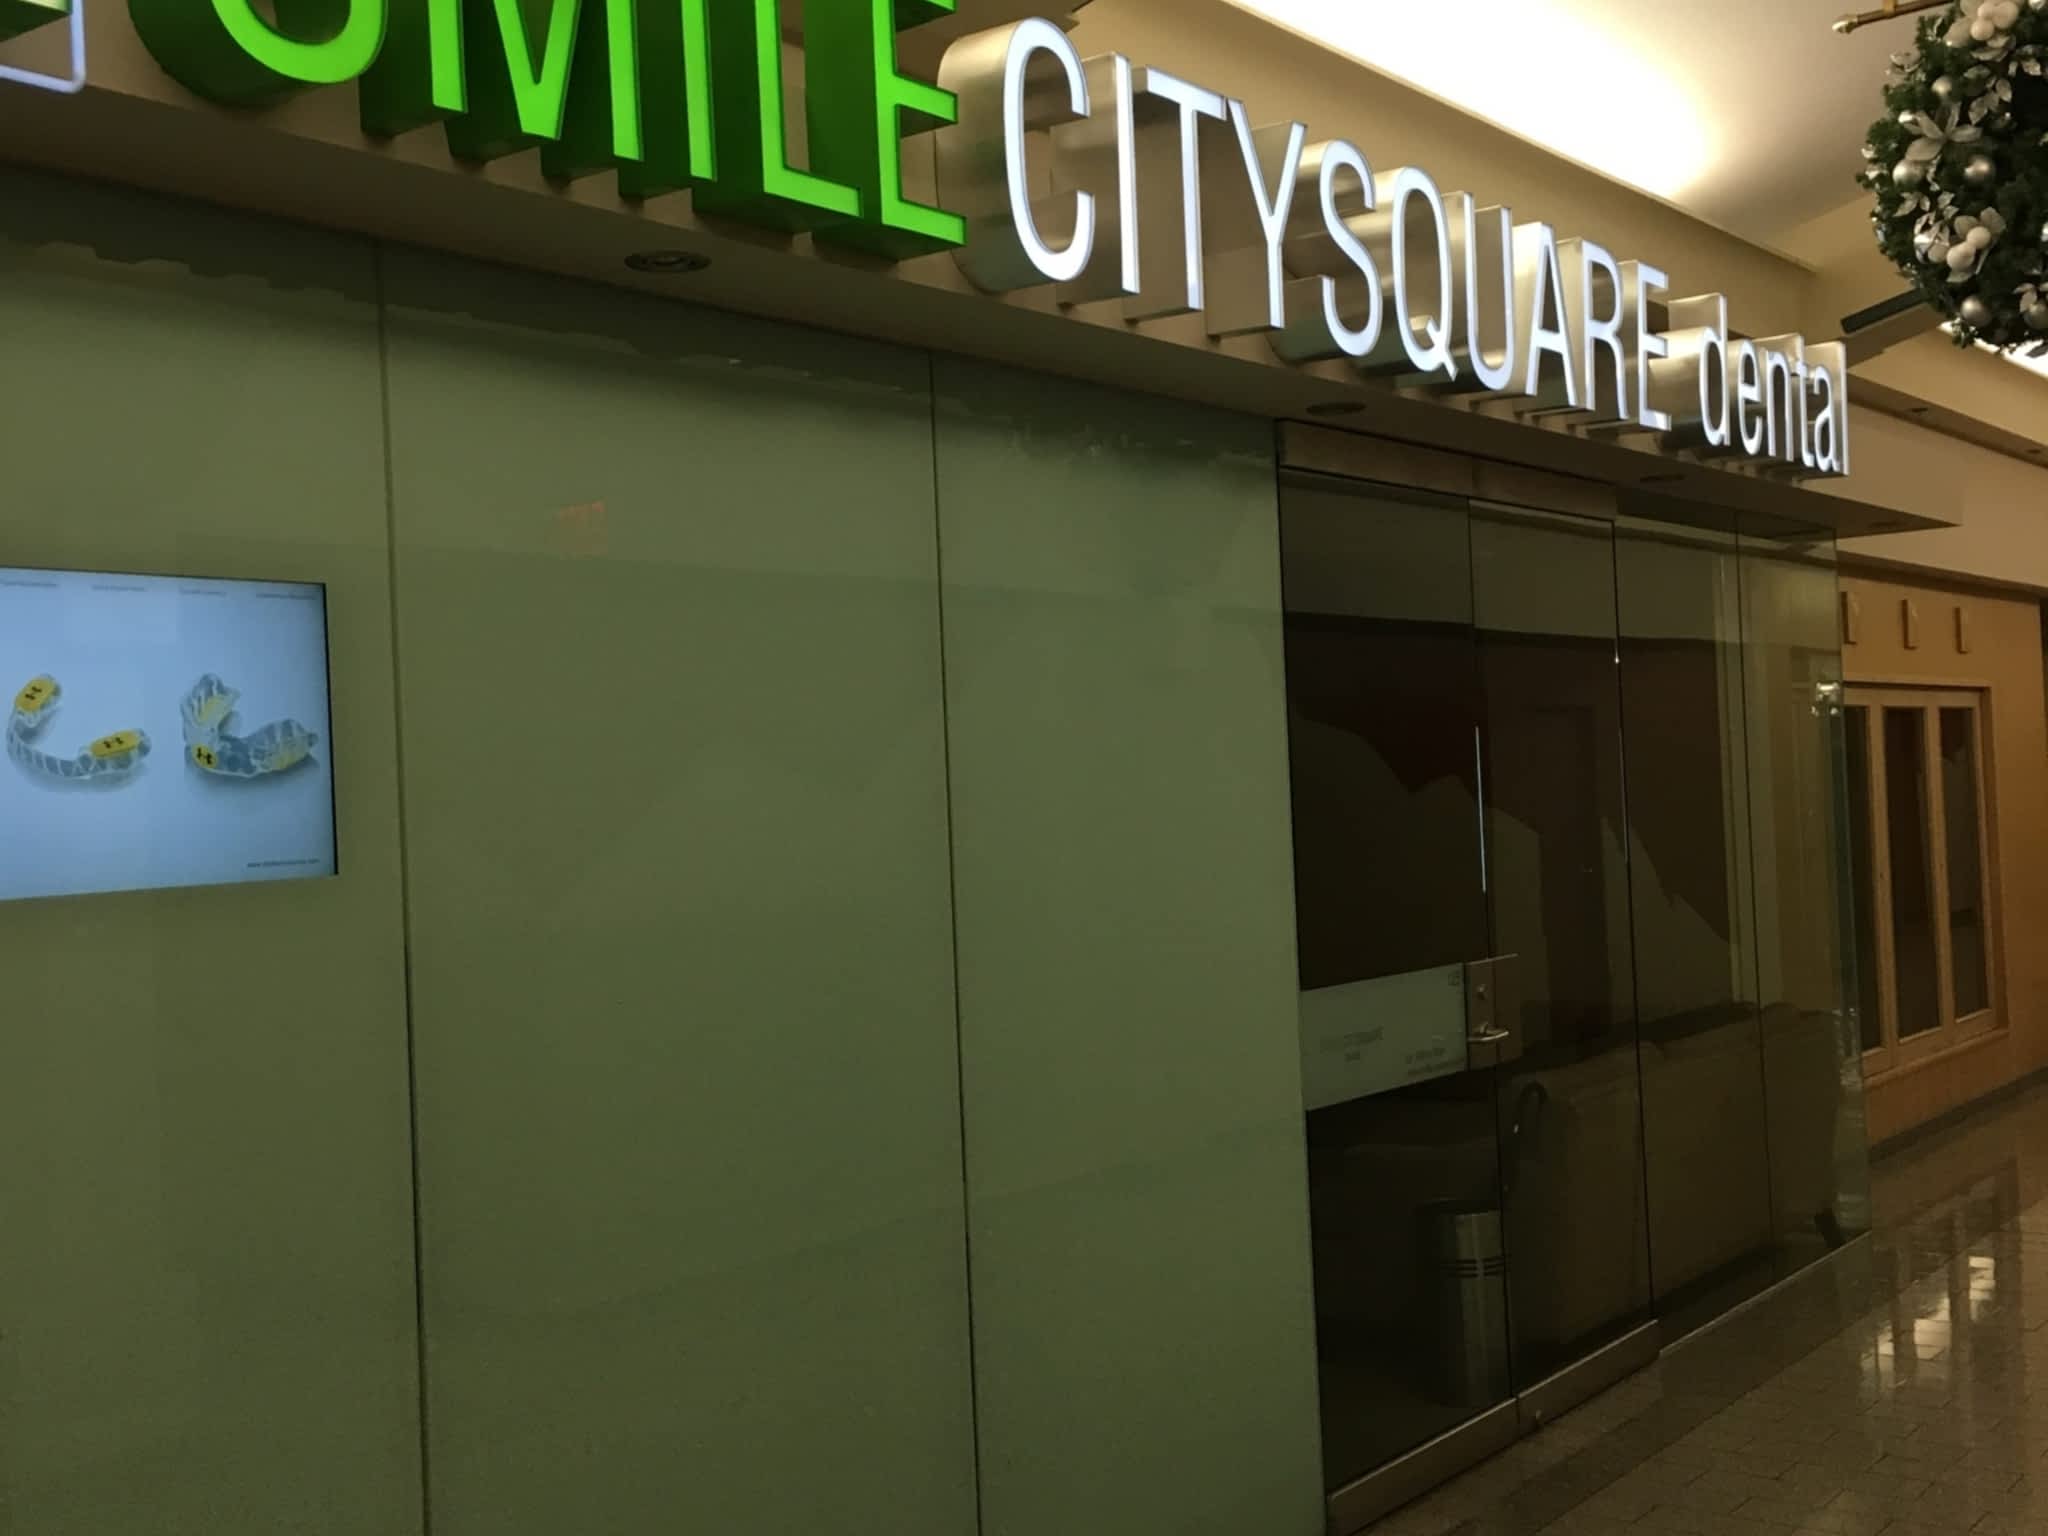 photo Smile City Square Dental